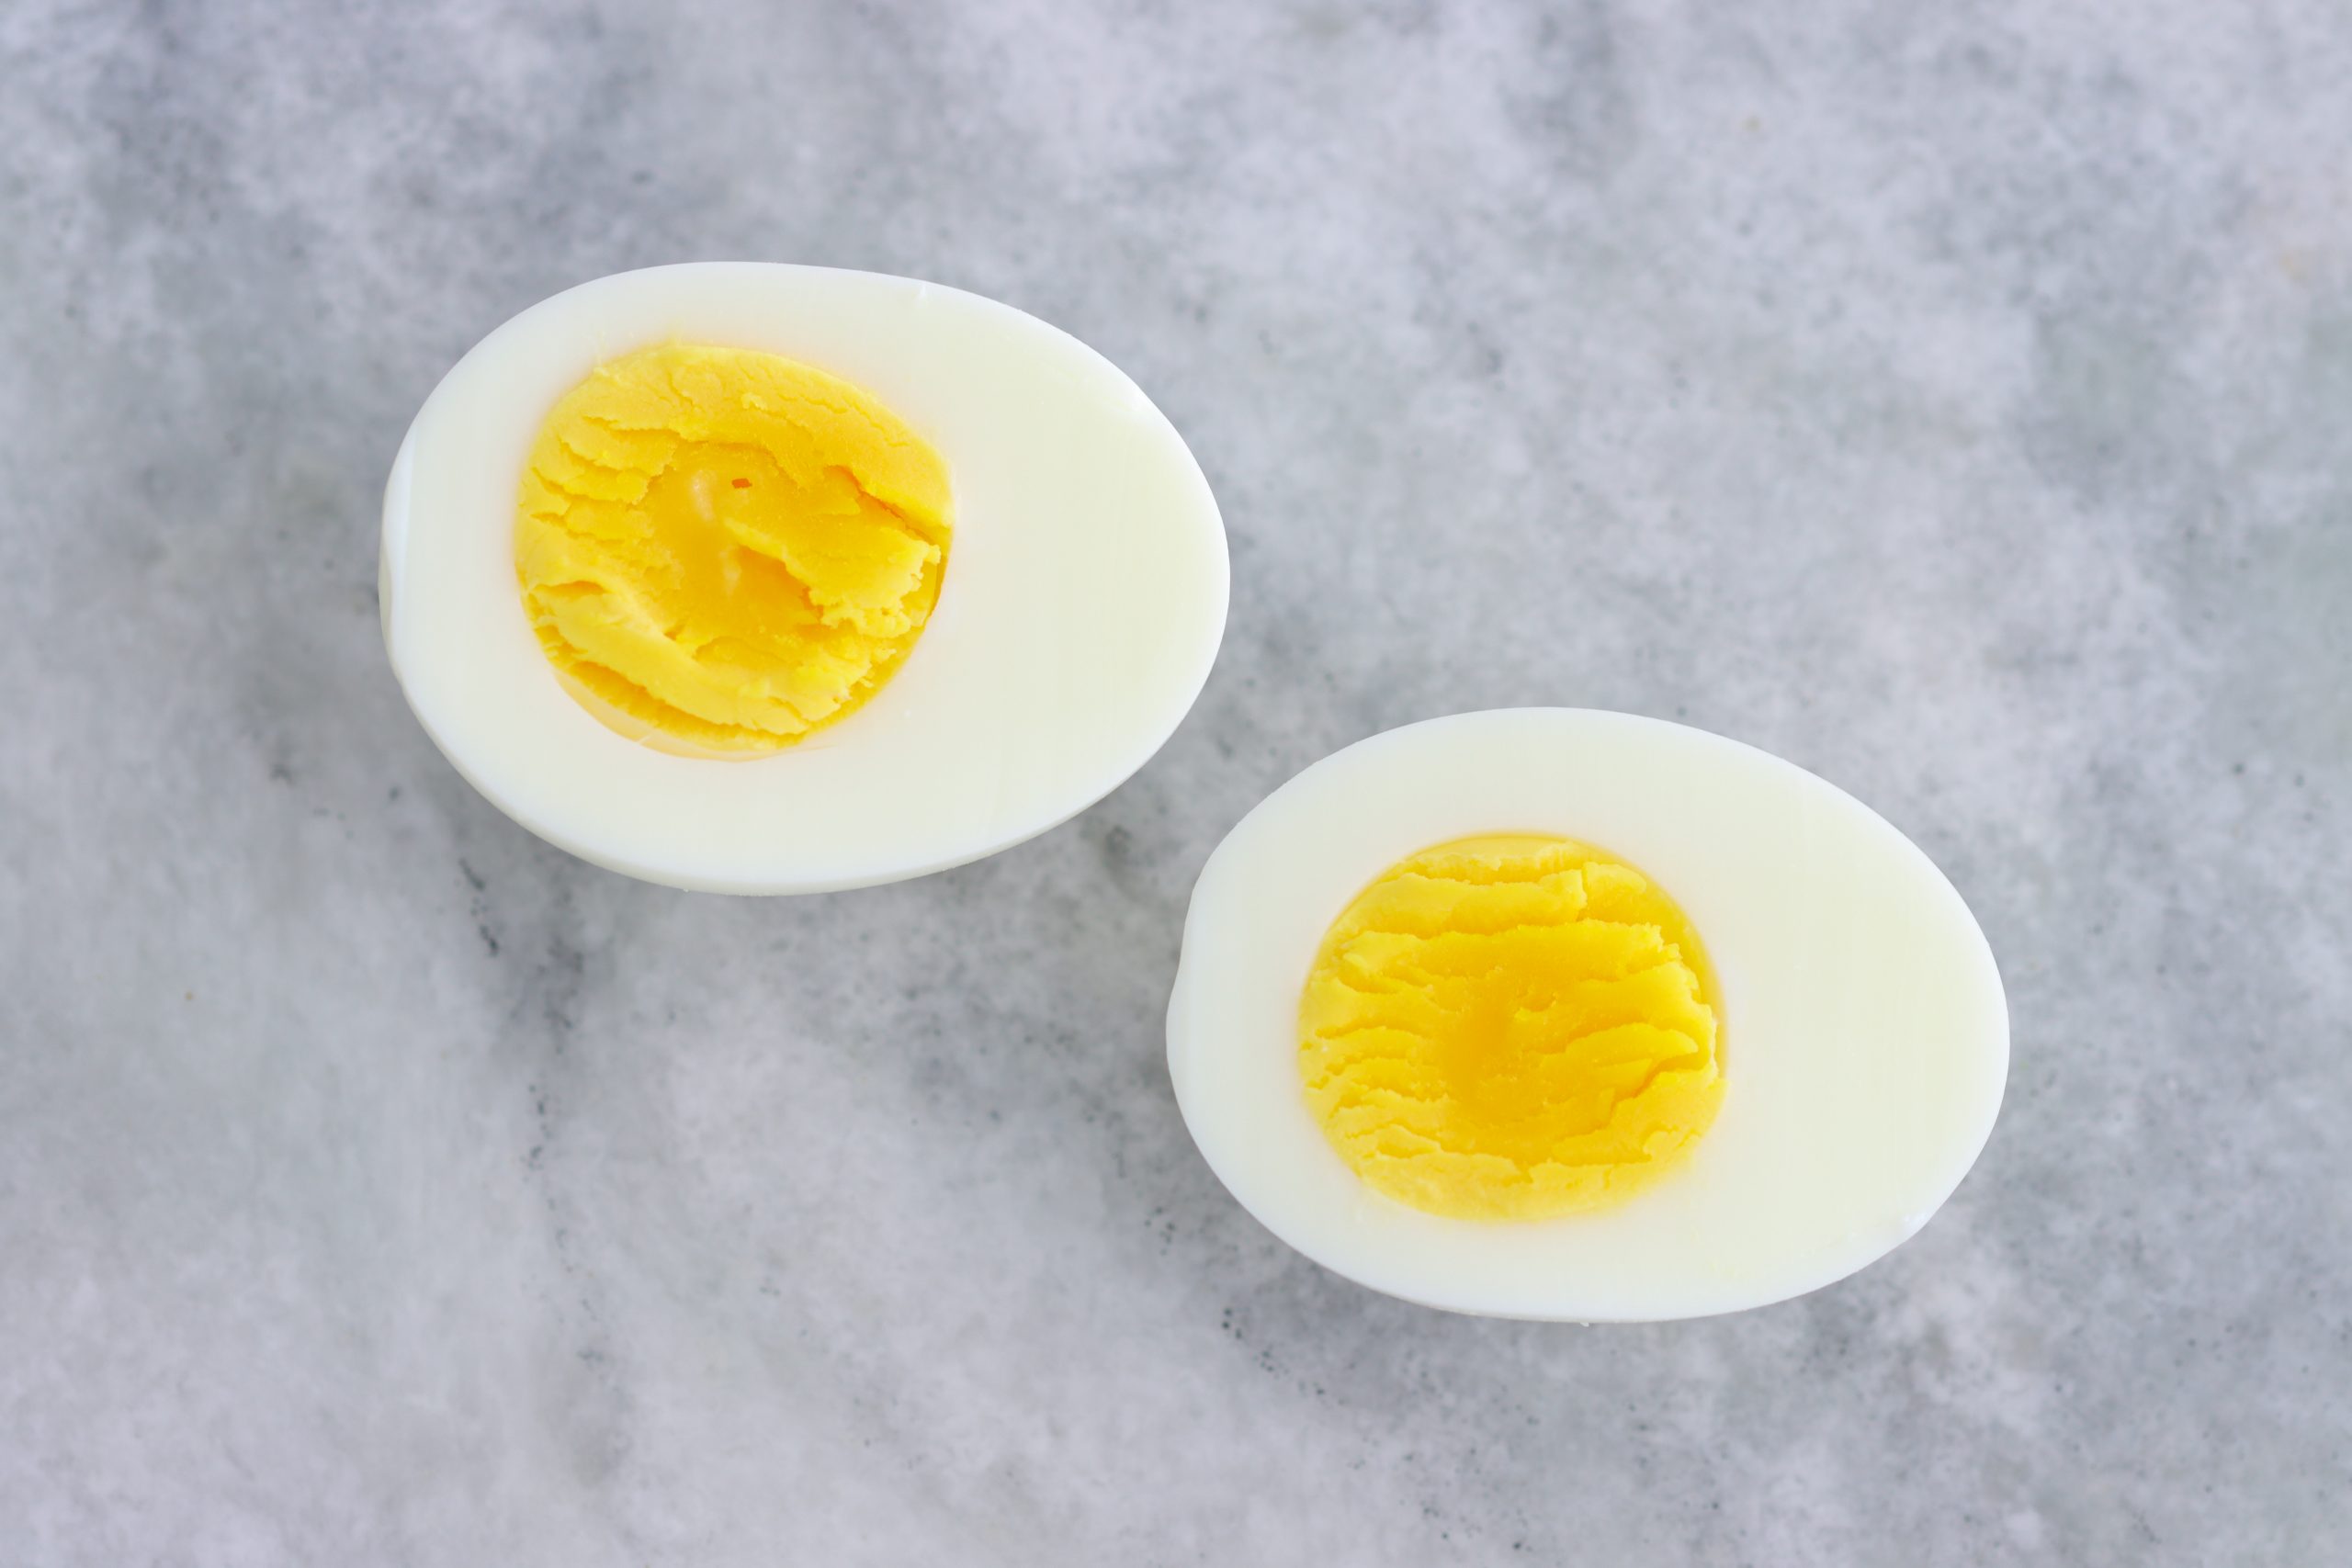 Boil Eggs. Deviled Eggs meaning. Hard-boiled Egg, yolk leaking out, real photo, detail.